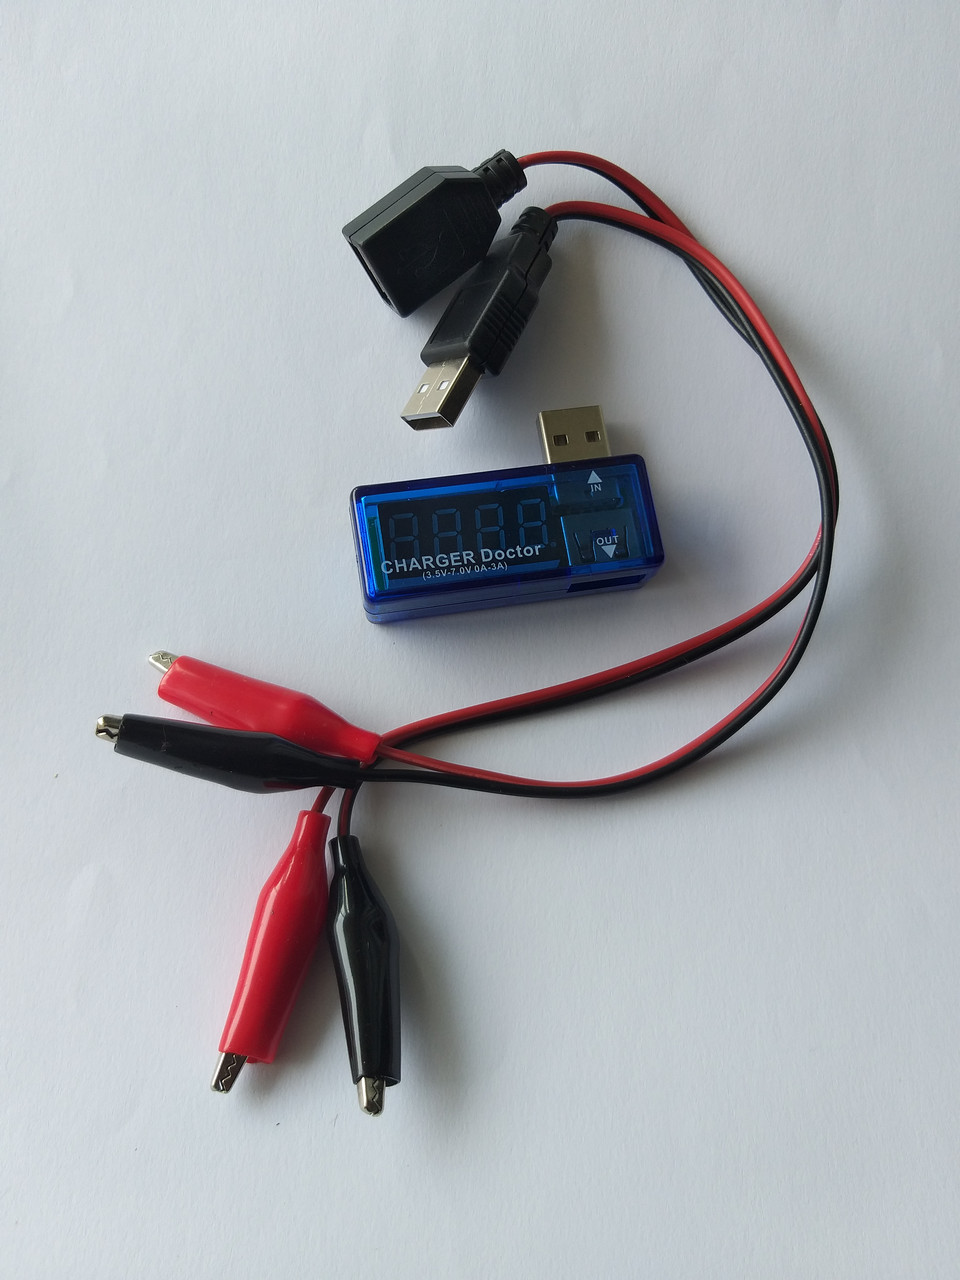 USB тестер вимірювач струму напруги (3-7V) + кабель